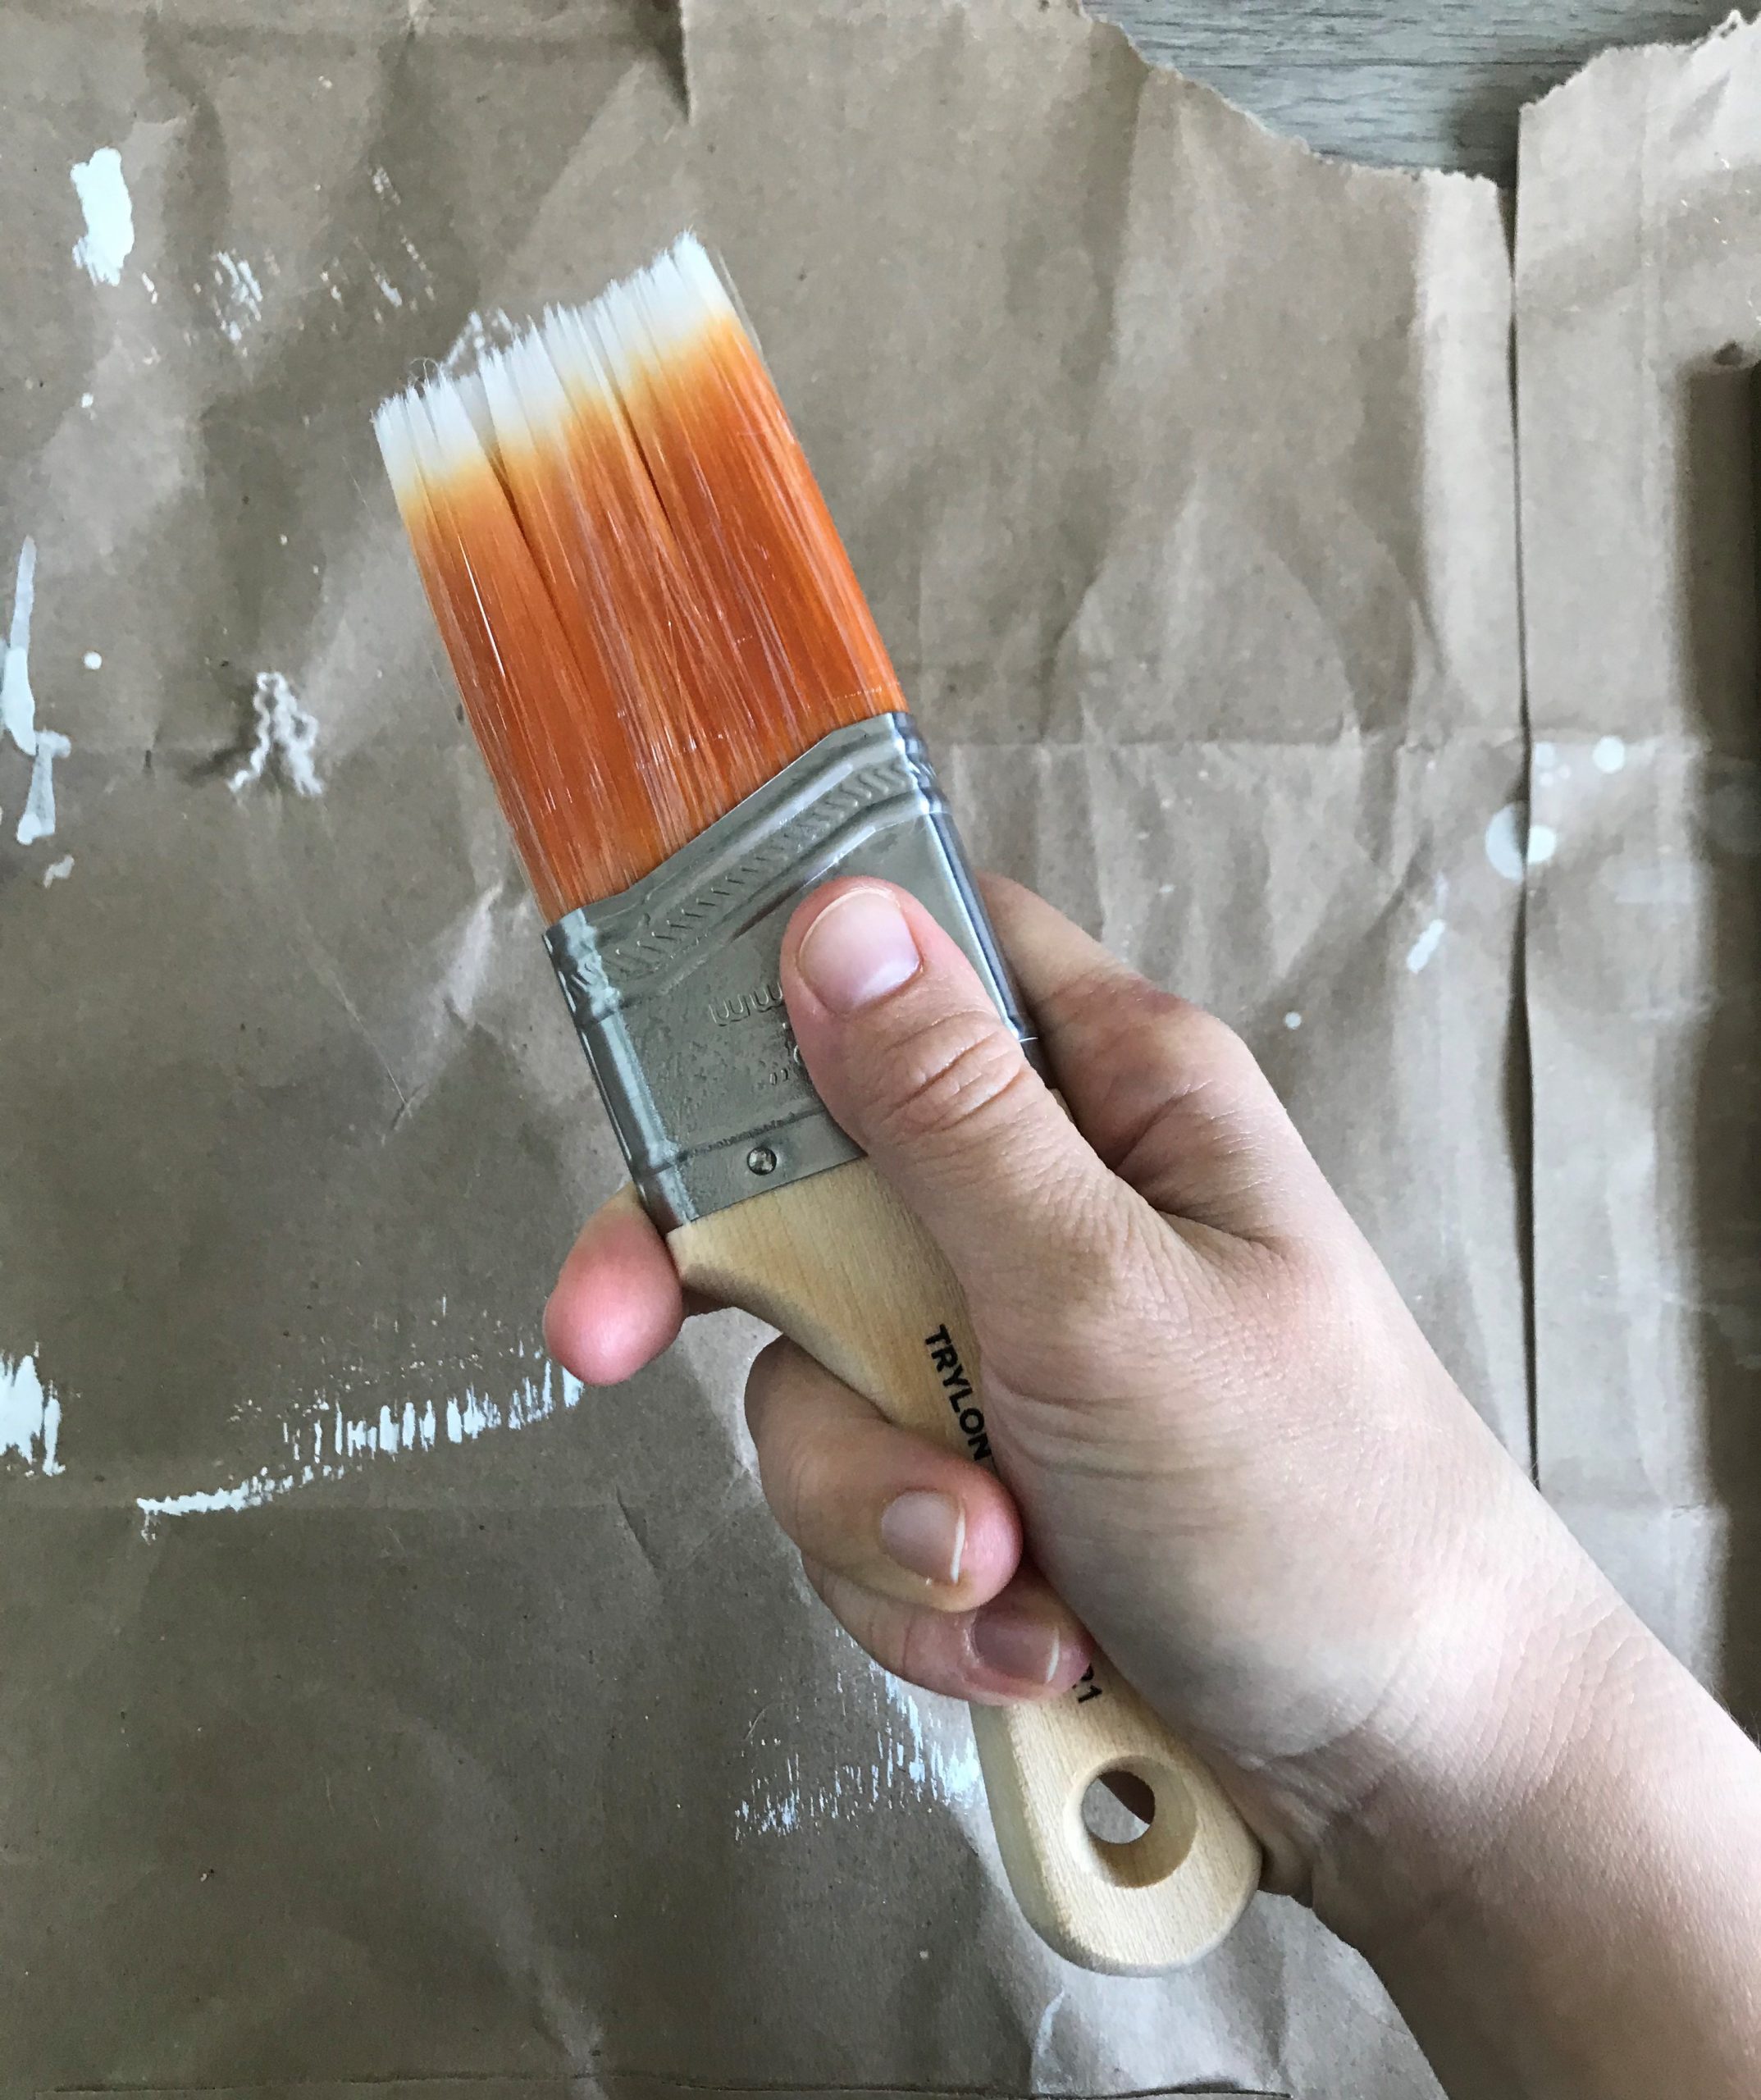 holding a Trylon shortcut brush